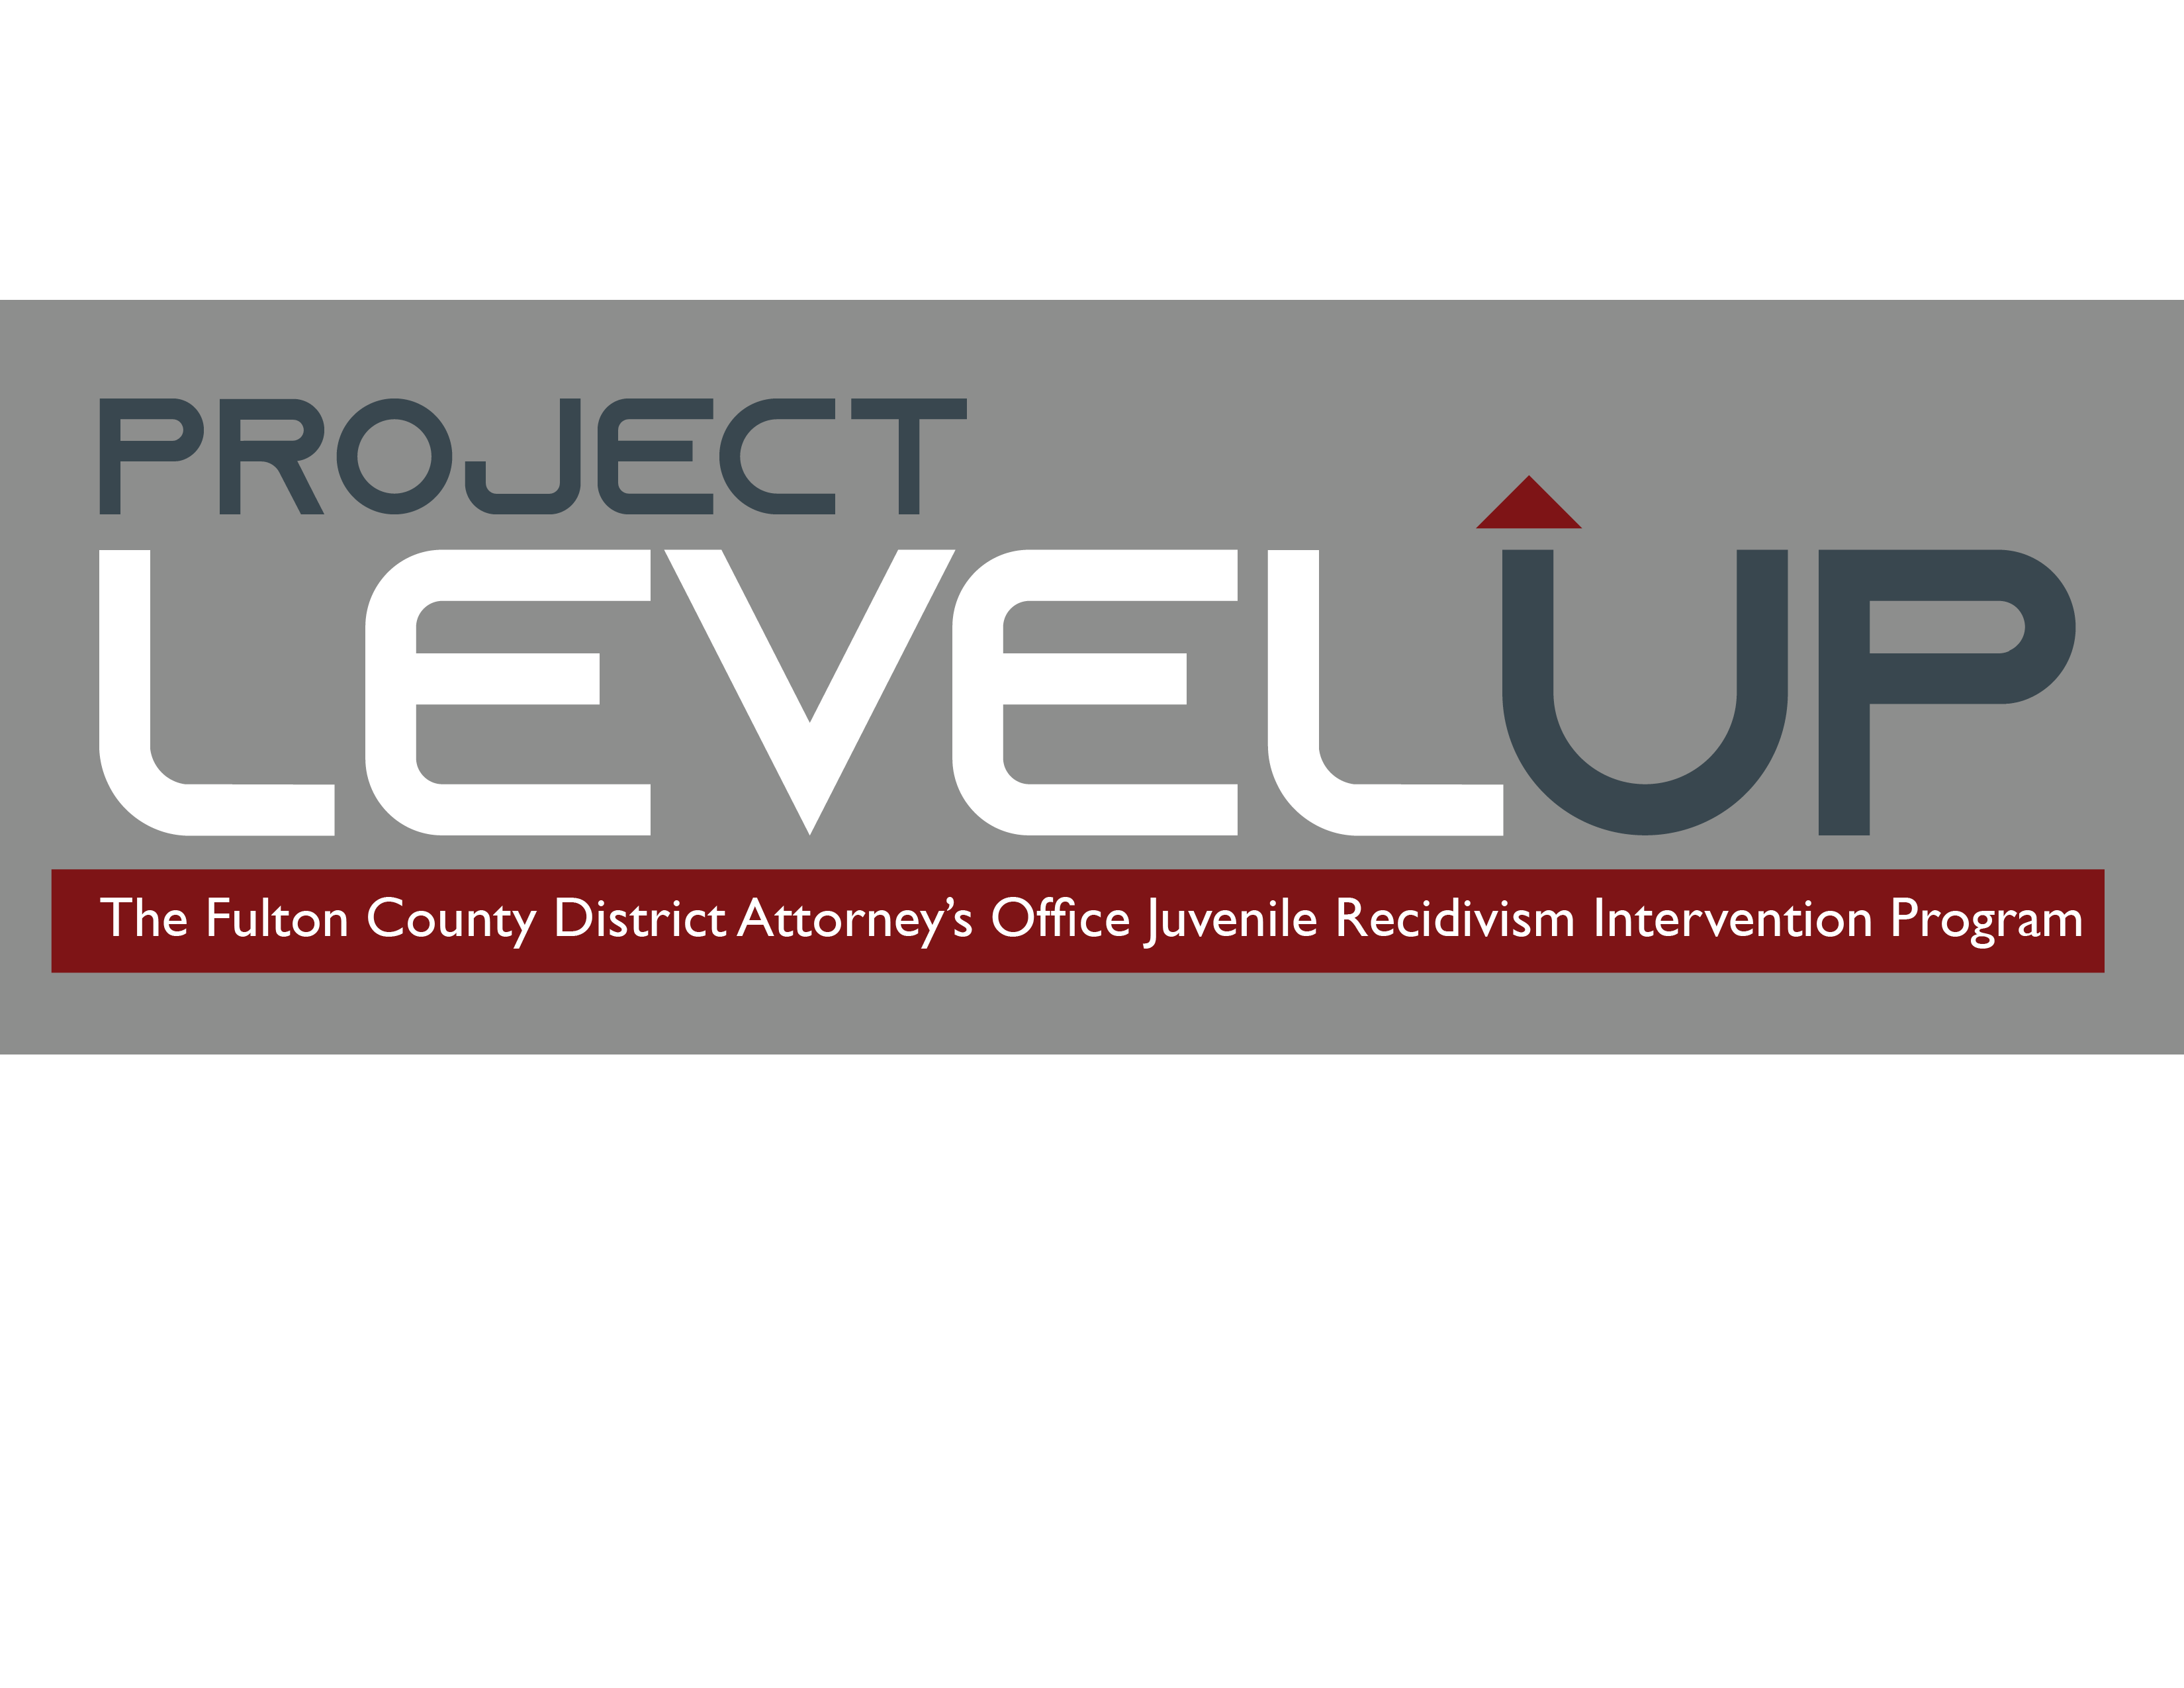 Project Level Up logo